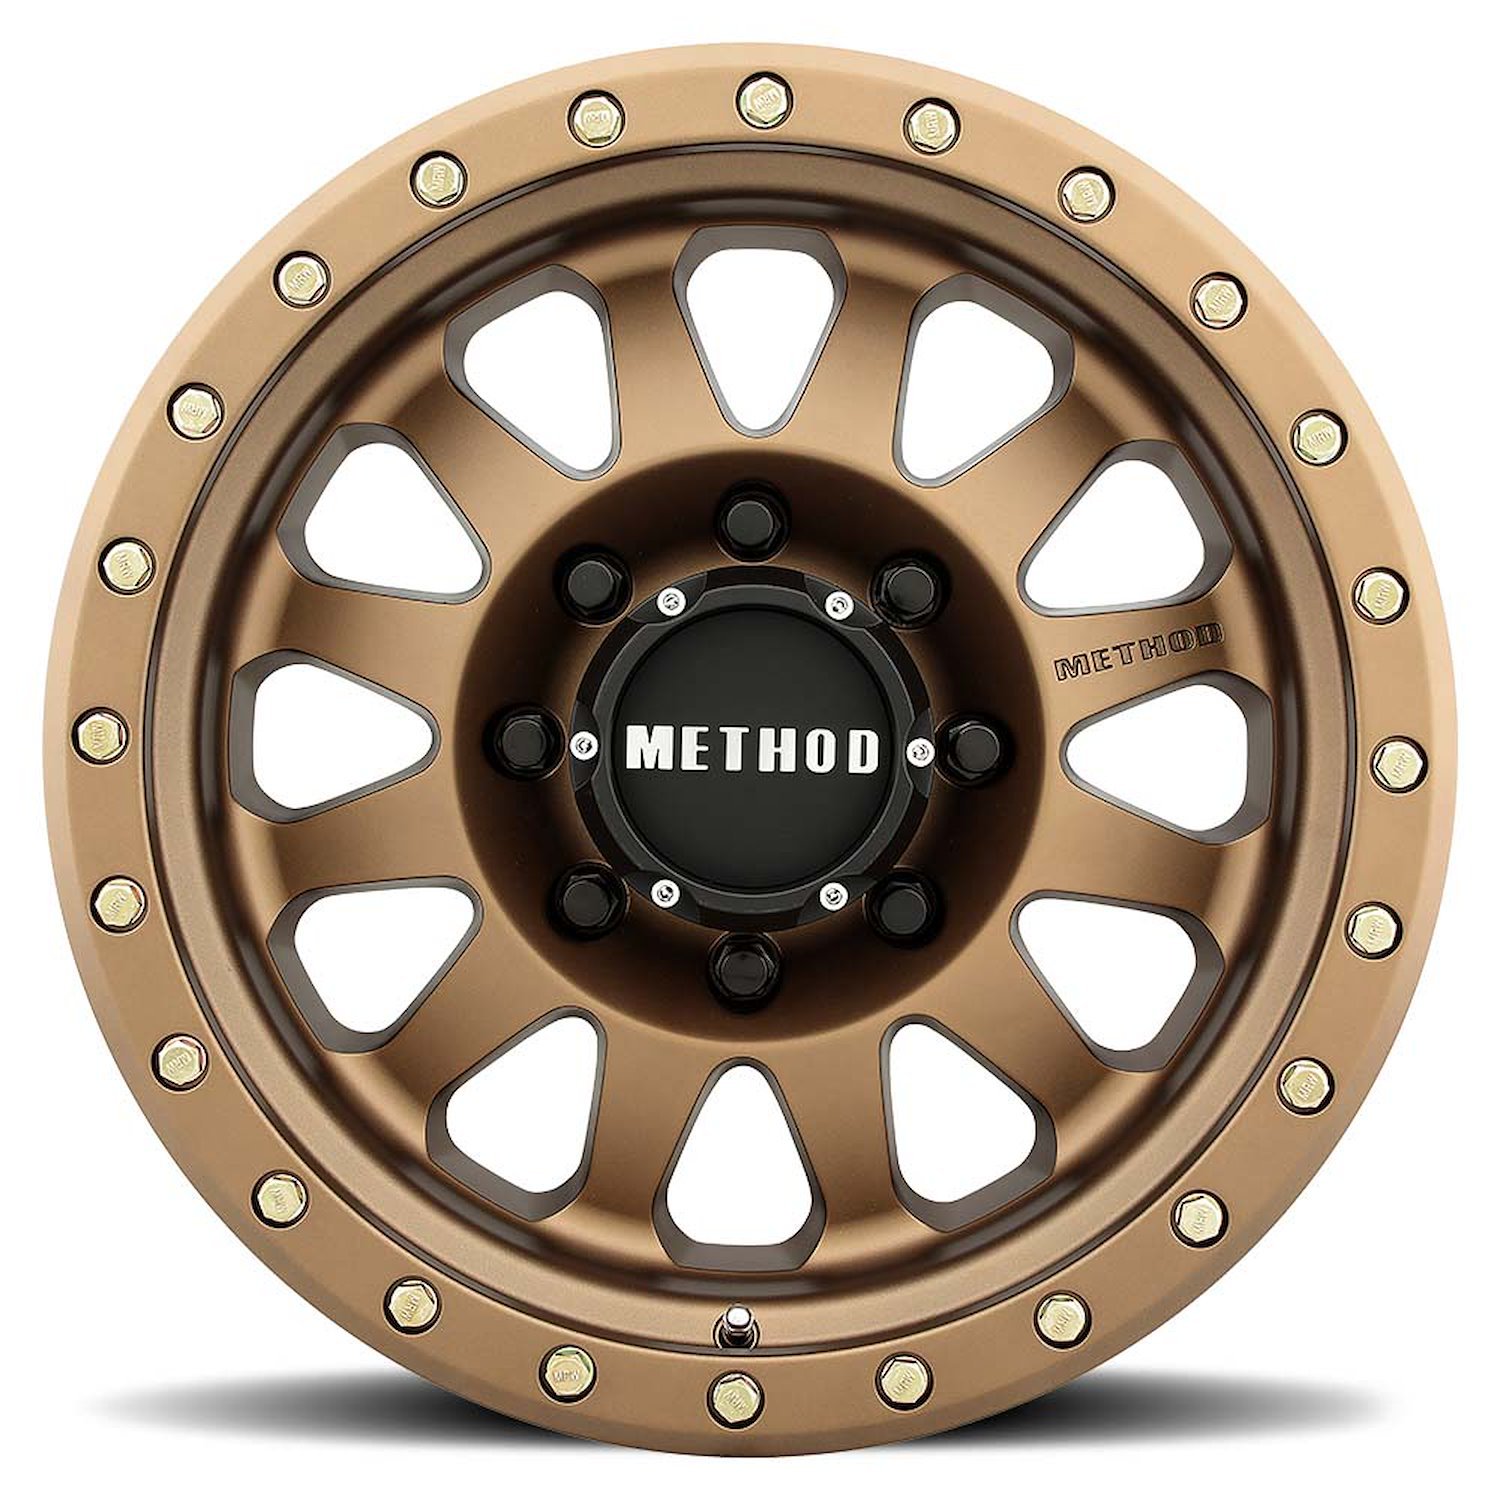 MR30478580900 STREET MR304 Double Standard Wheel [Size: 17" x 8.5"] Method Bronze